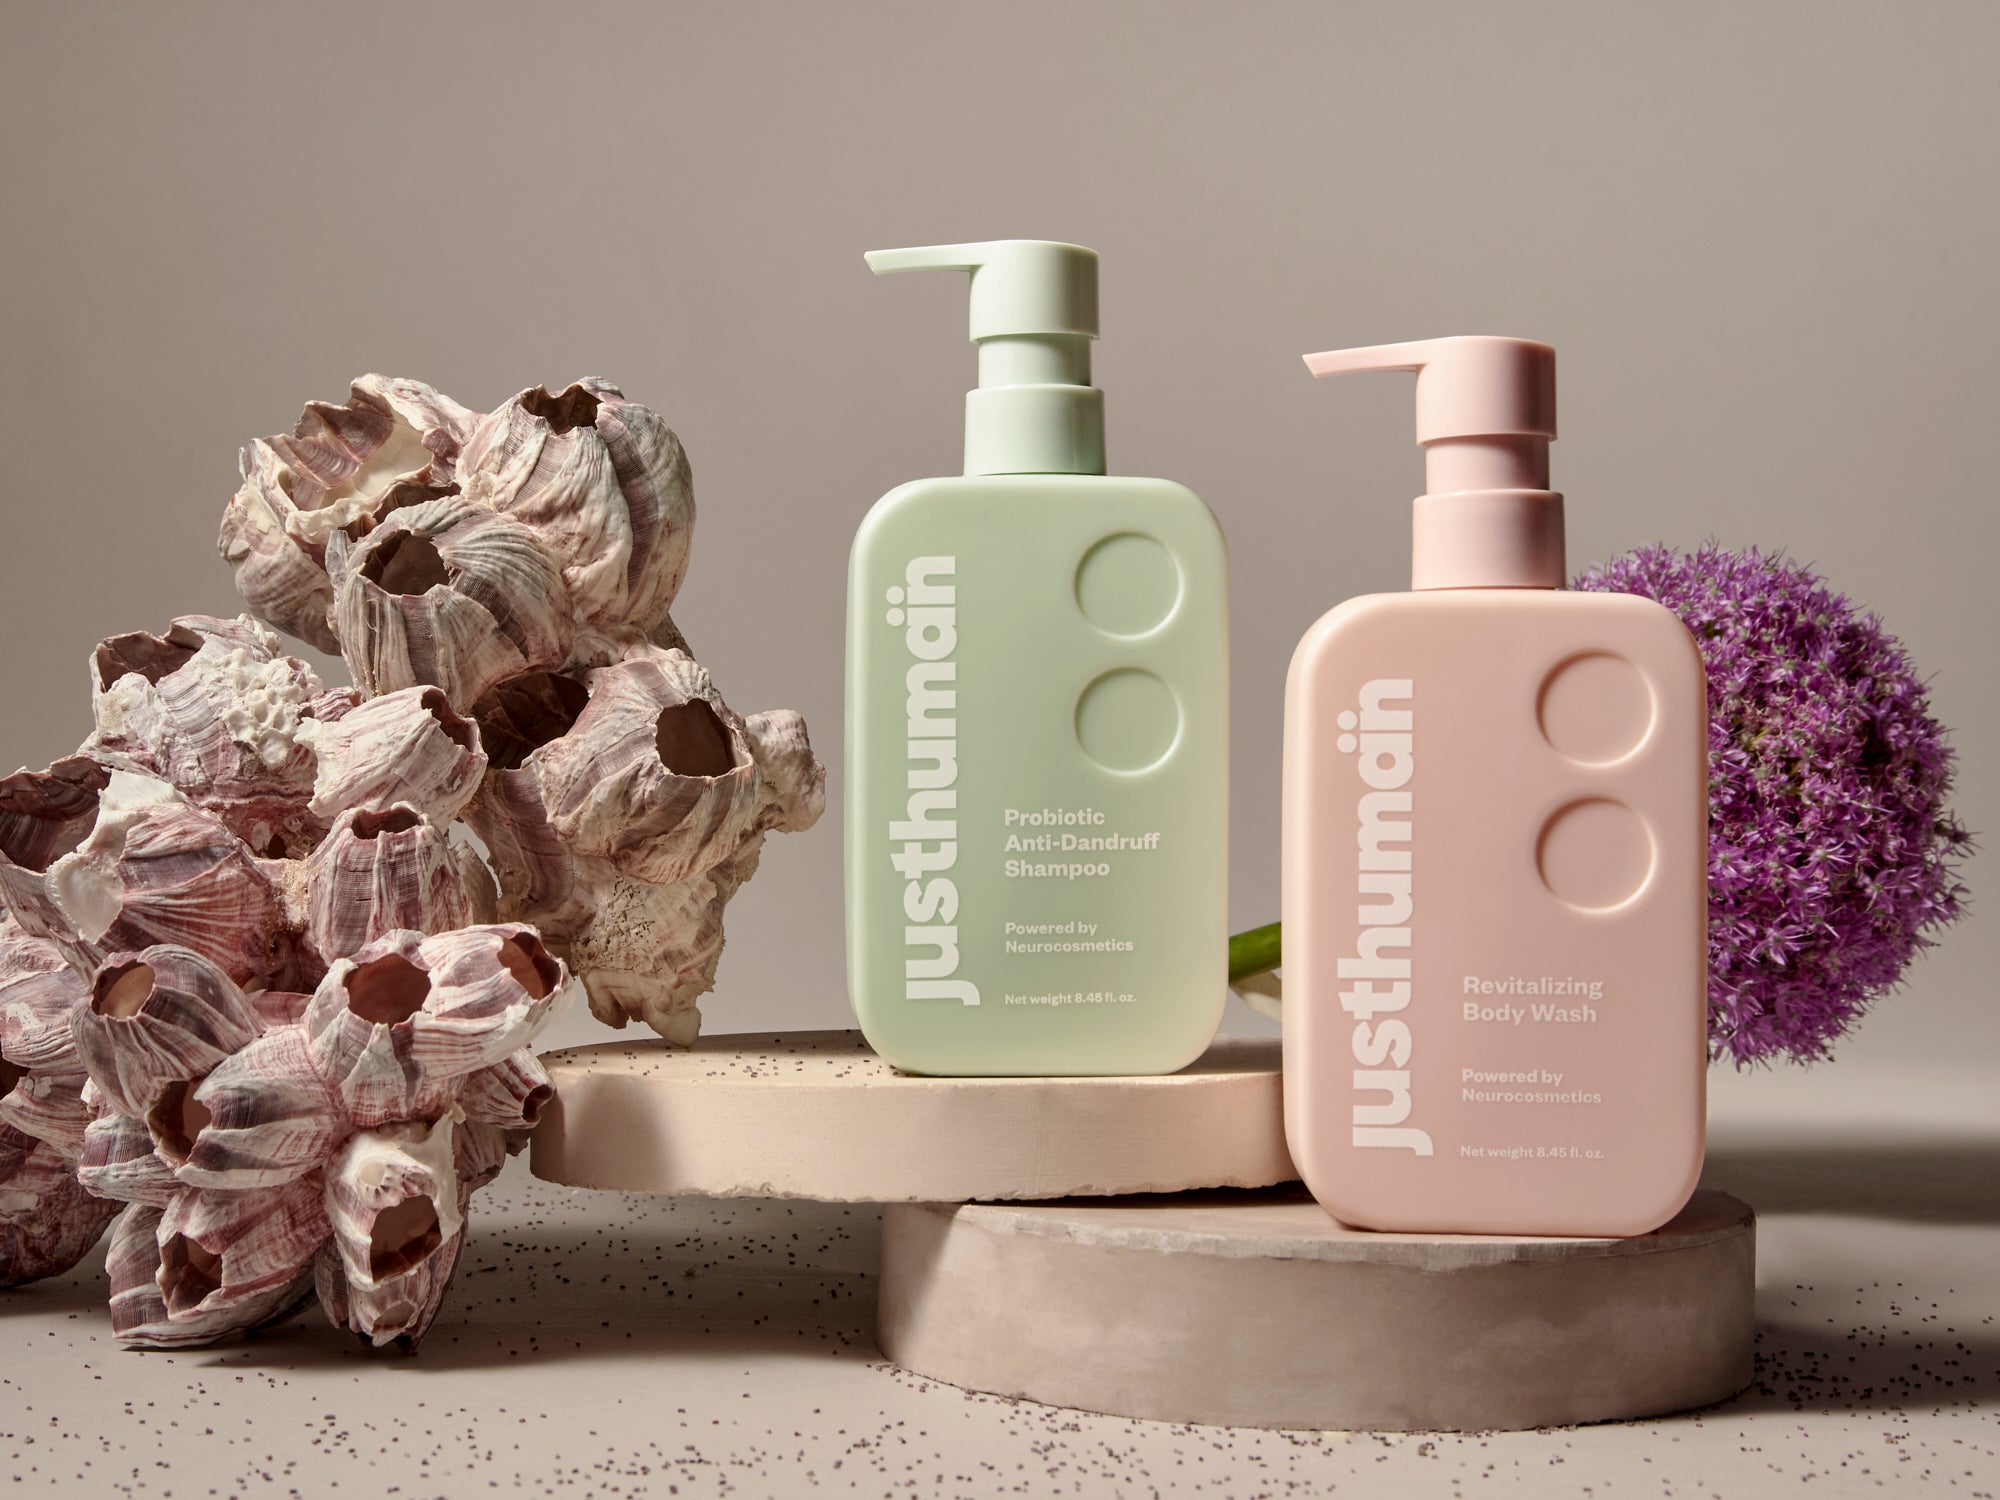 Probiotic Anti-Dandruff Shampoo & Body Wash